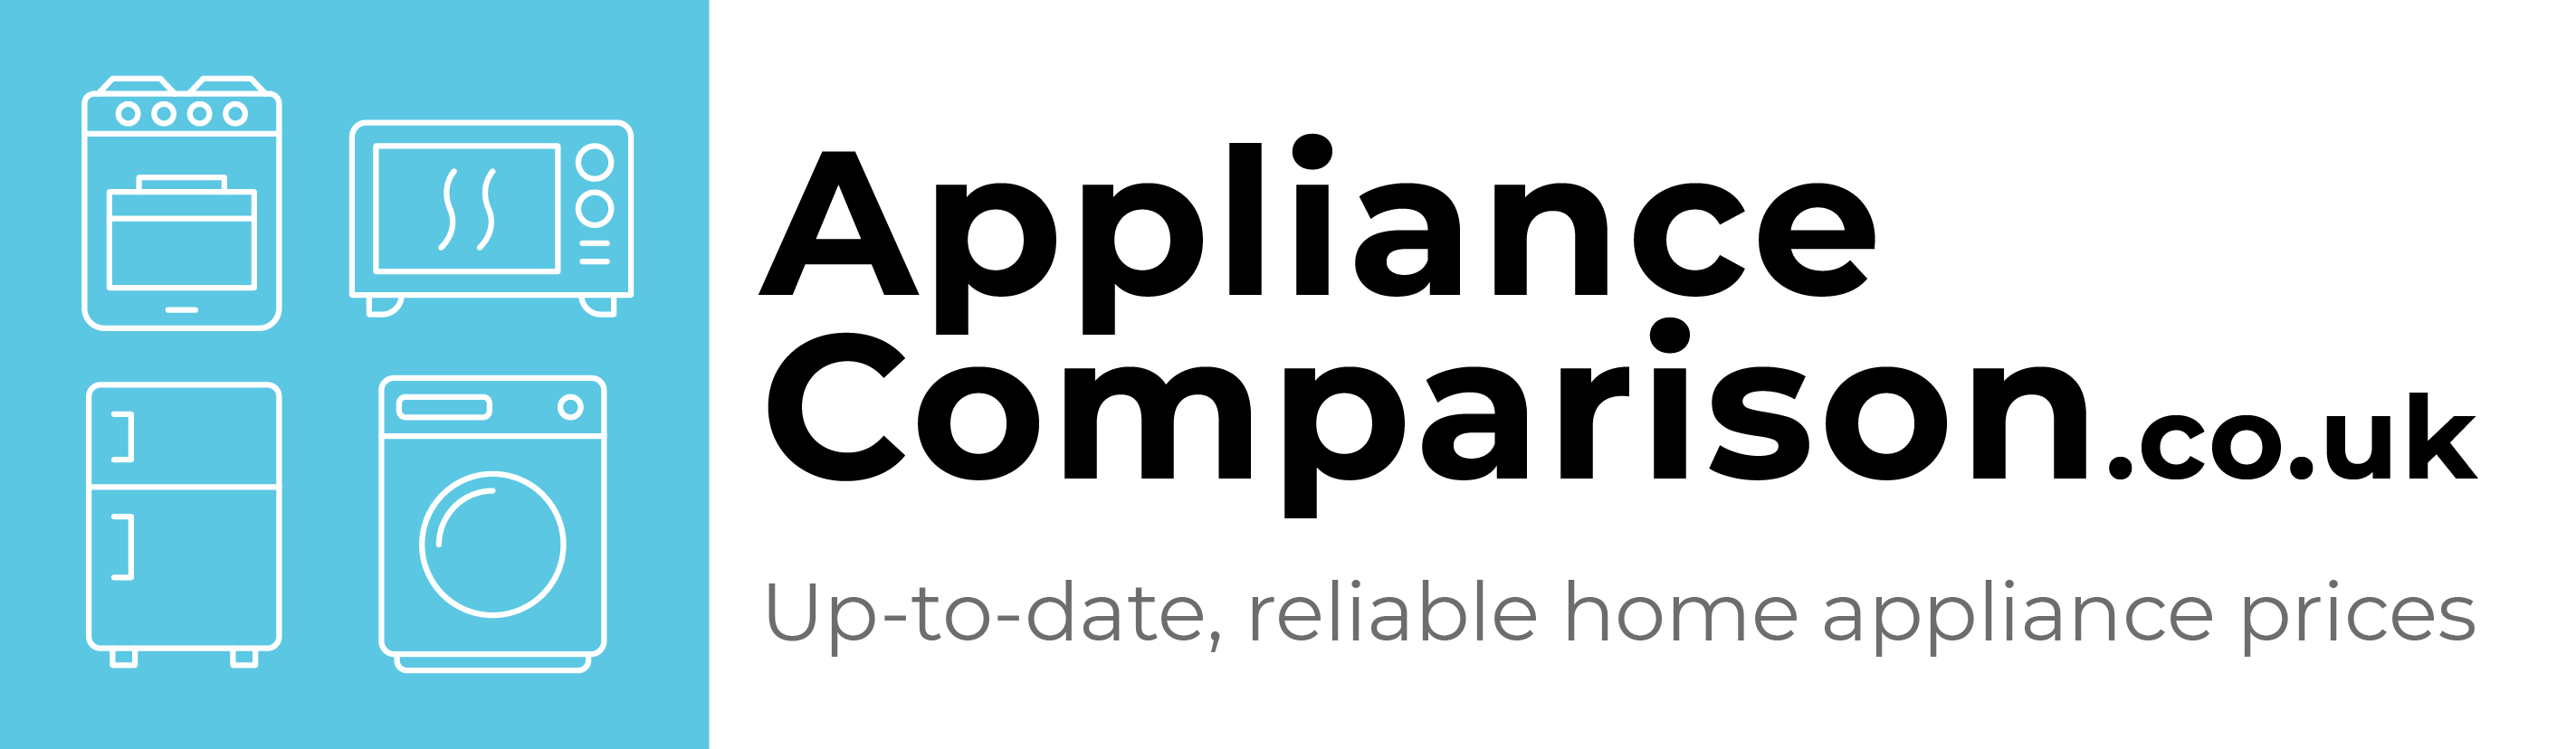 Appliance Comparison